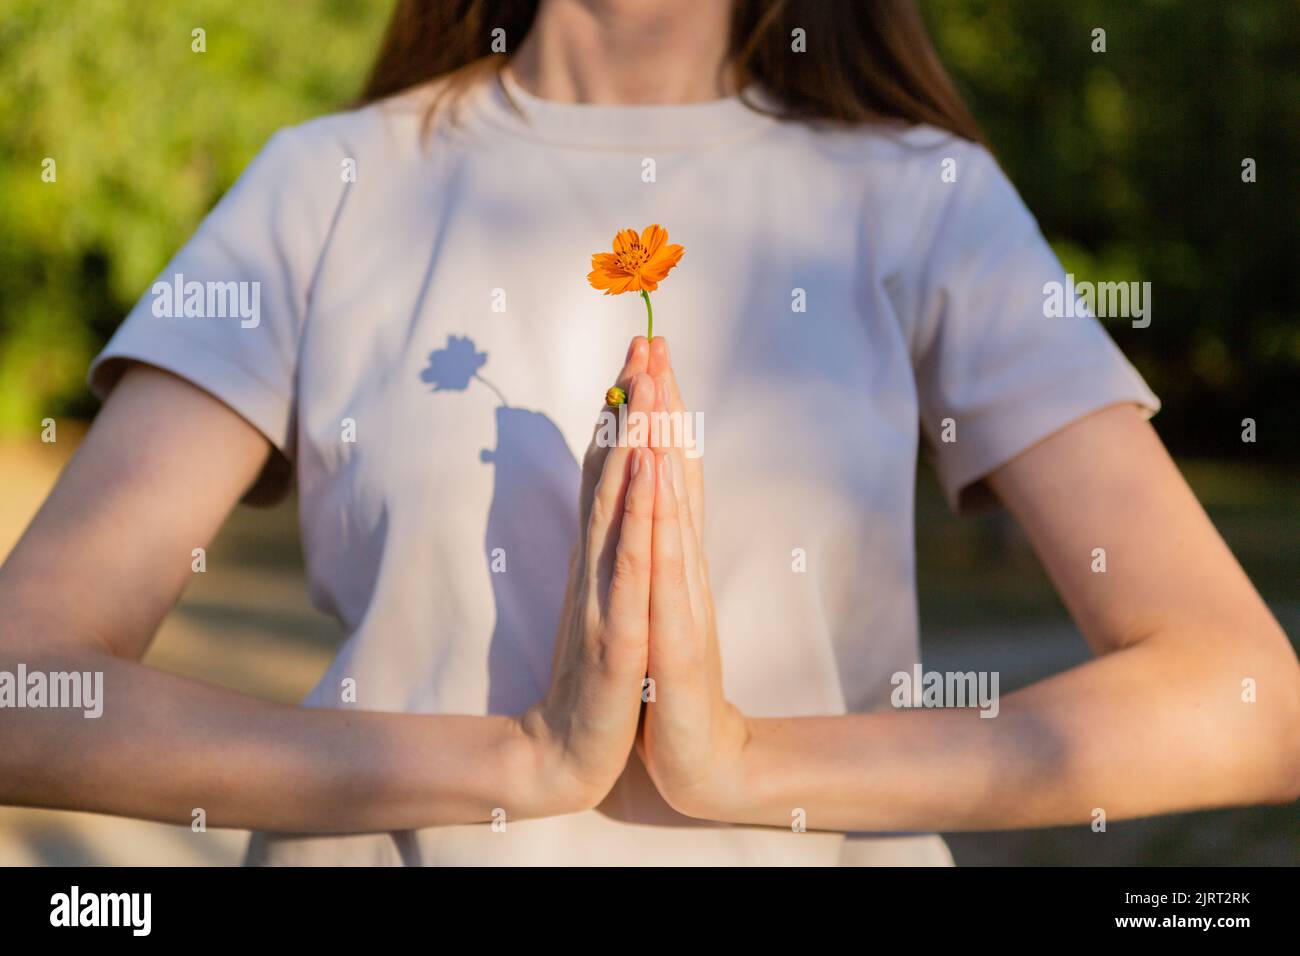 An orange flower in a woman hands Stock Photo